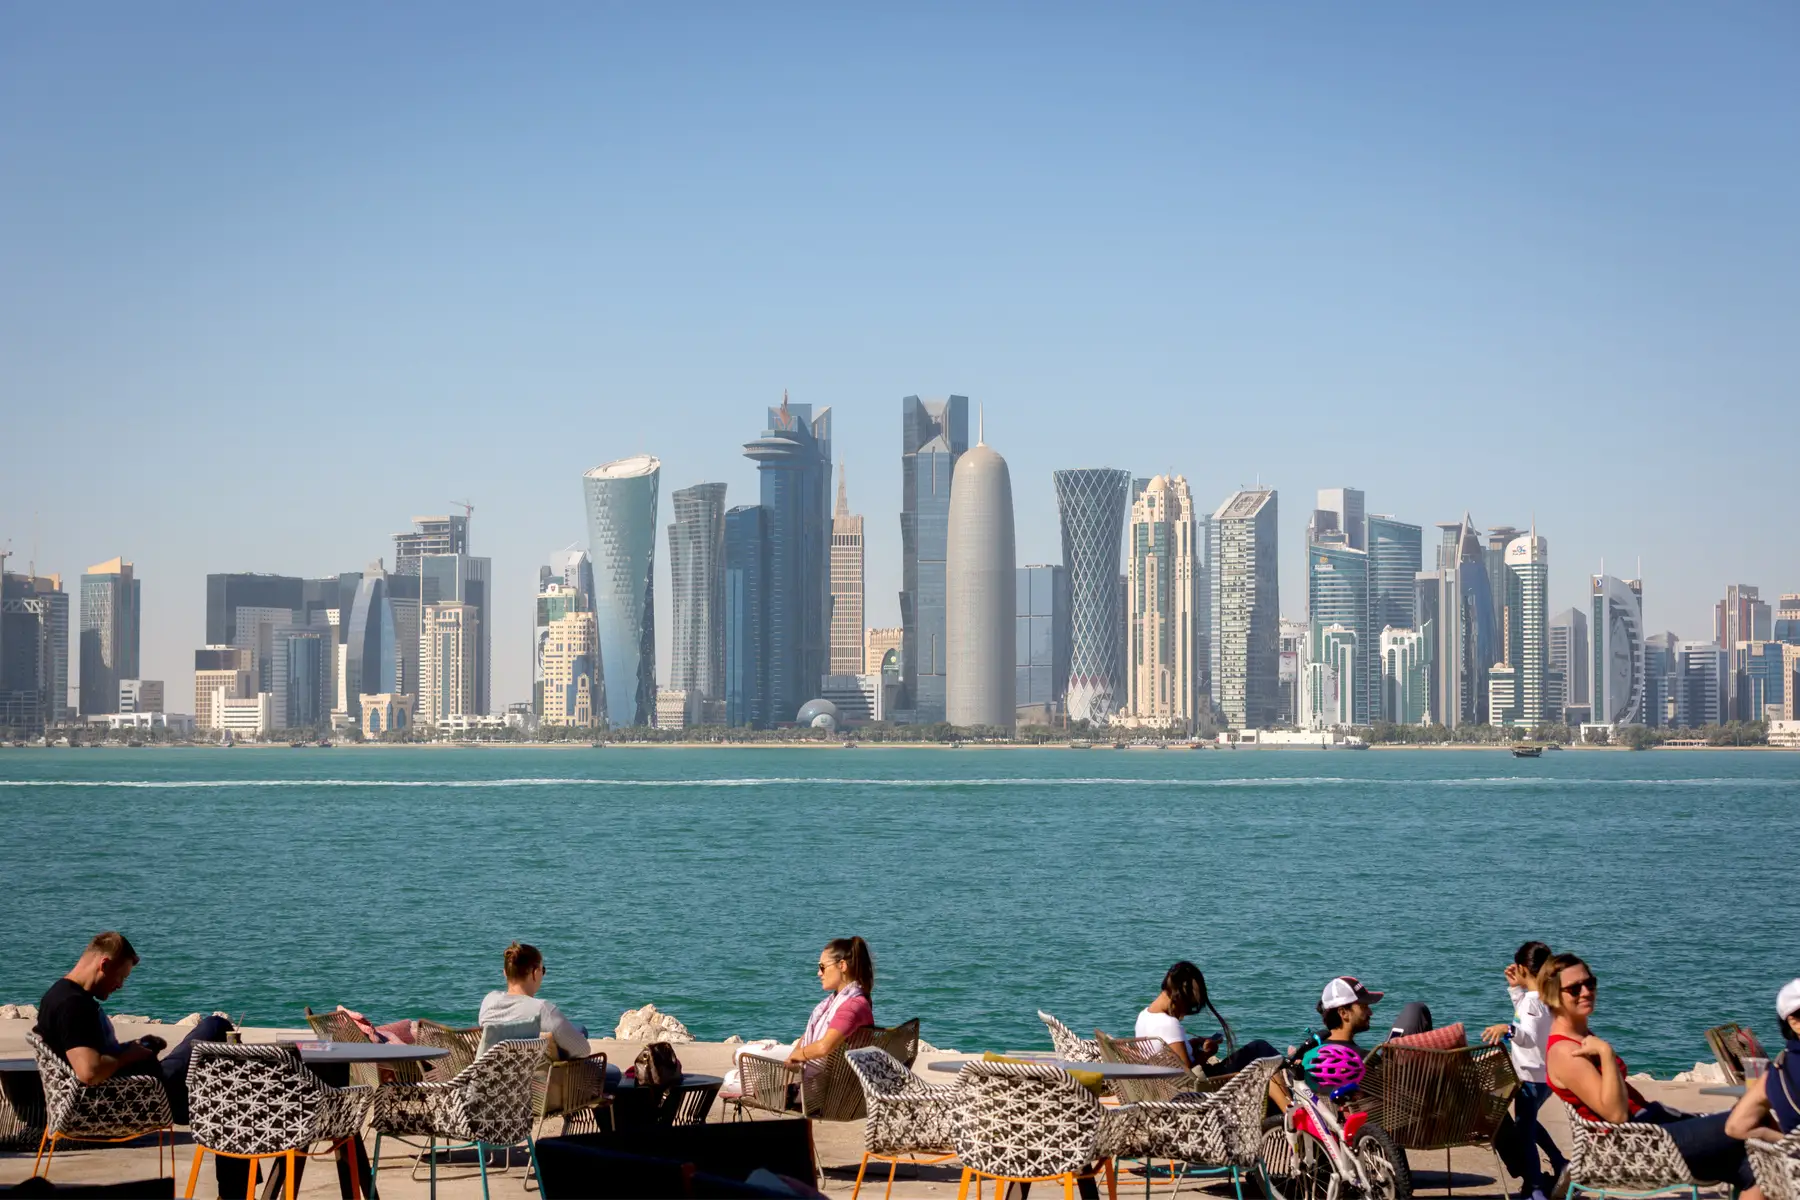 cafe patrons enjoy a view of Doha's skyline